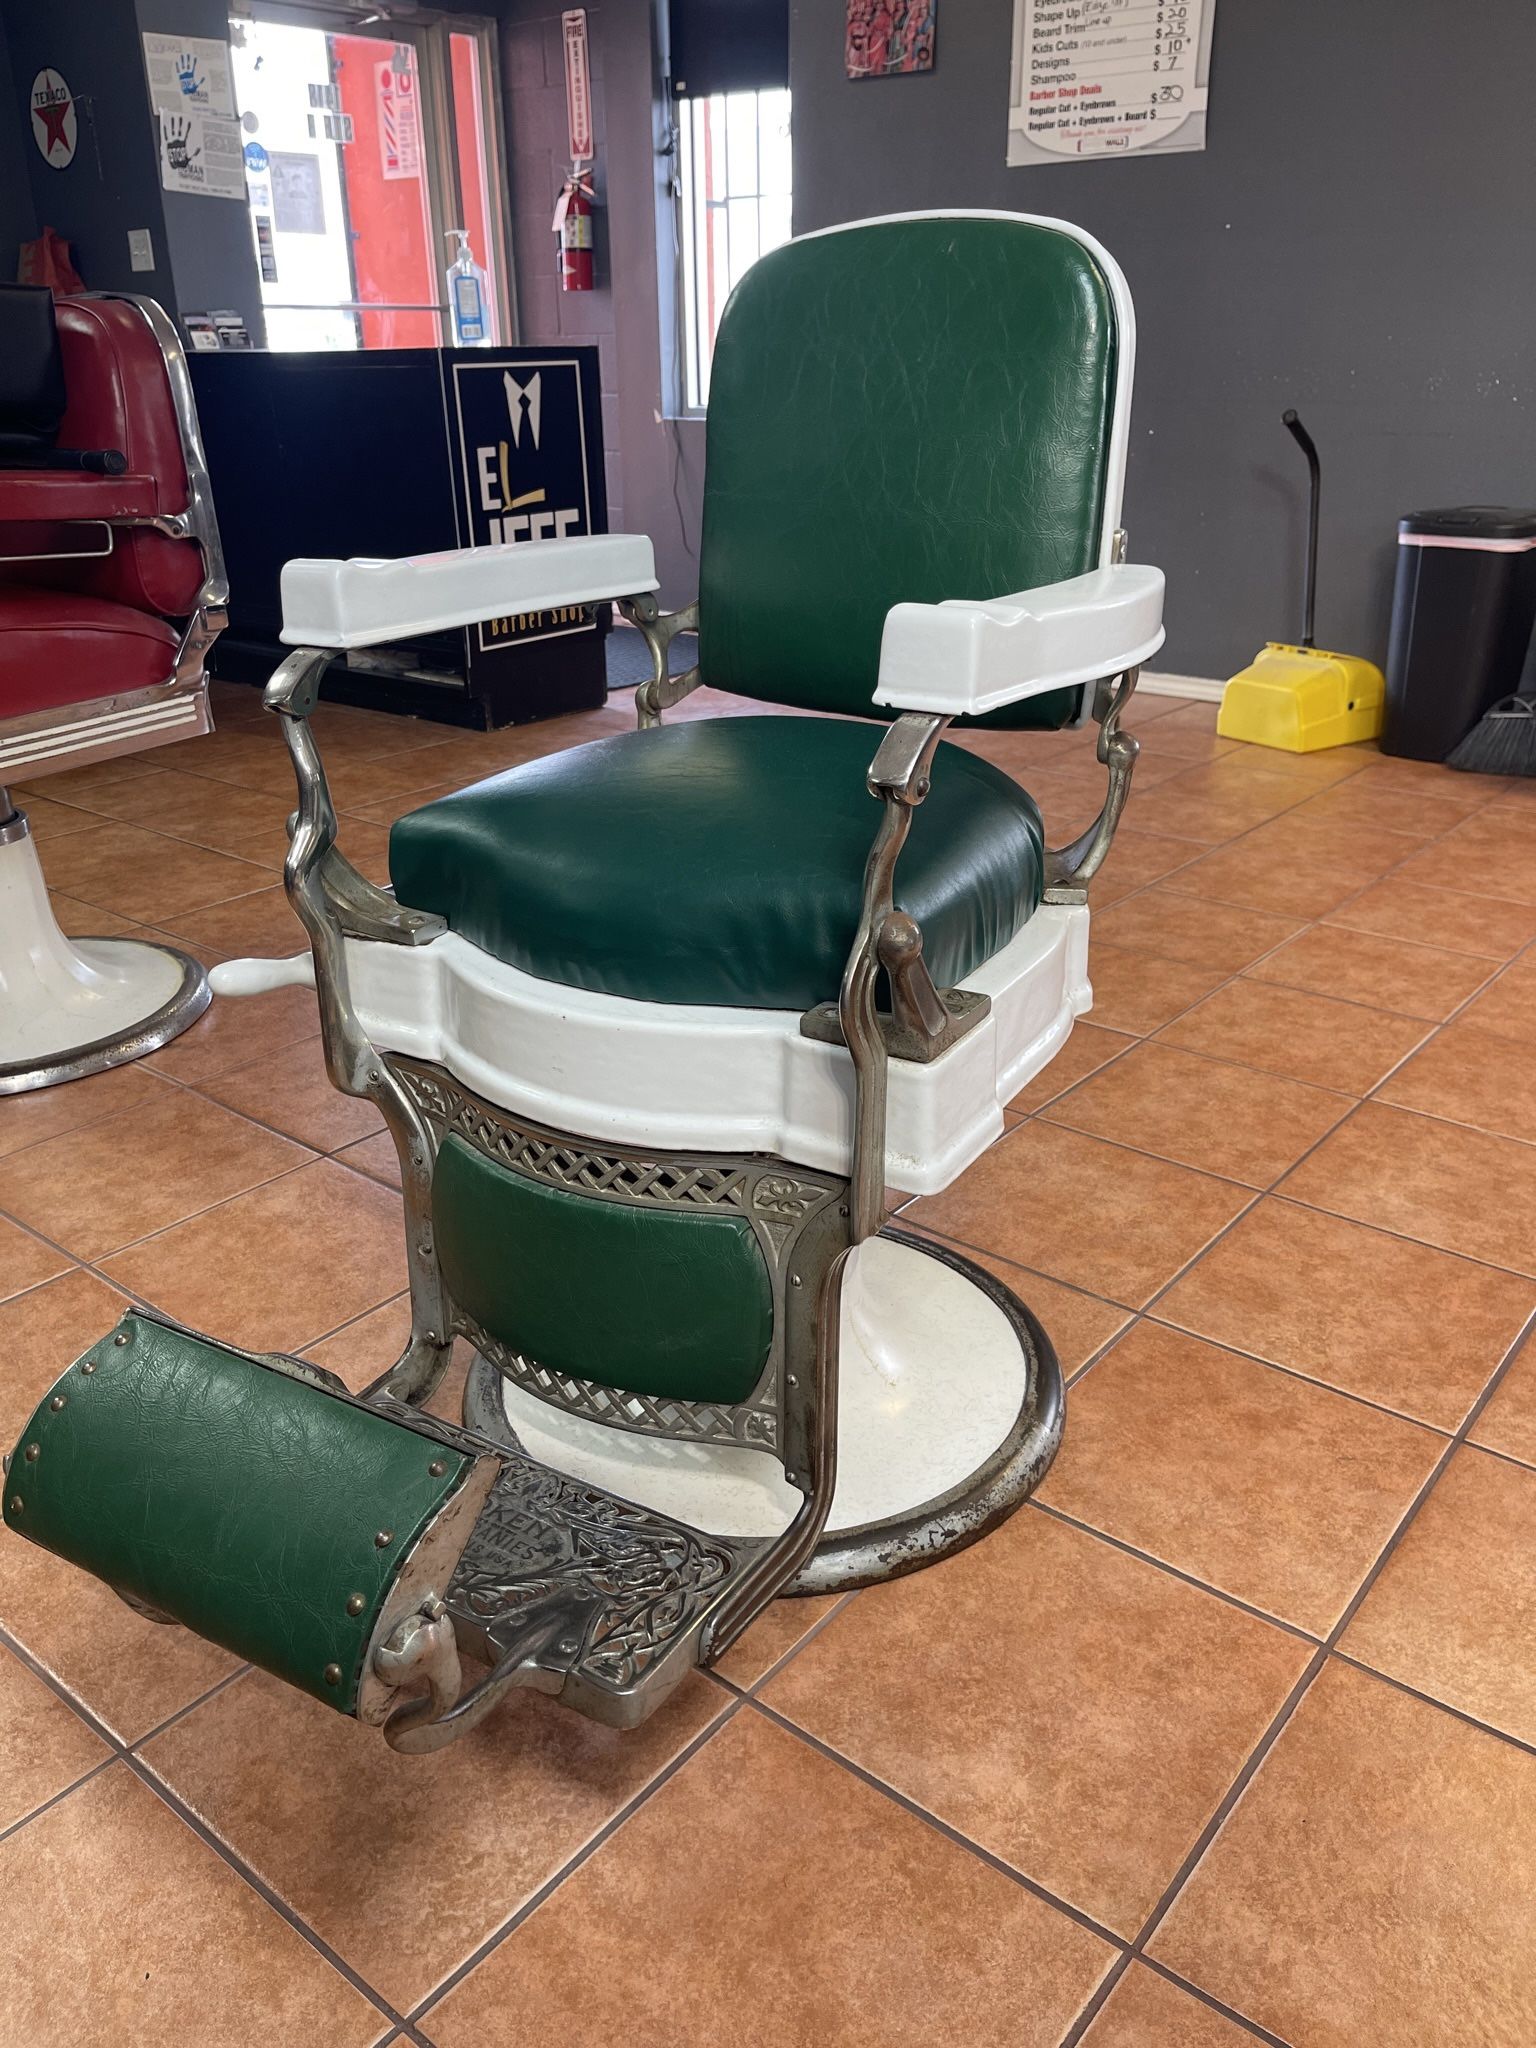 1920’s Koken antique barber chair